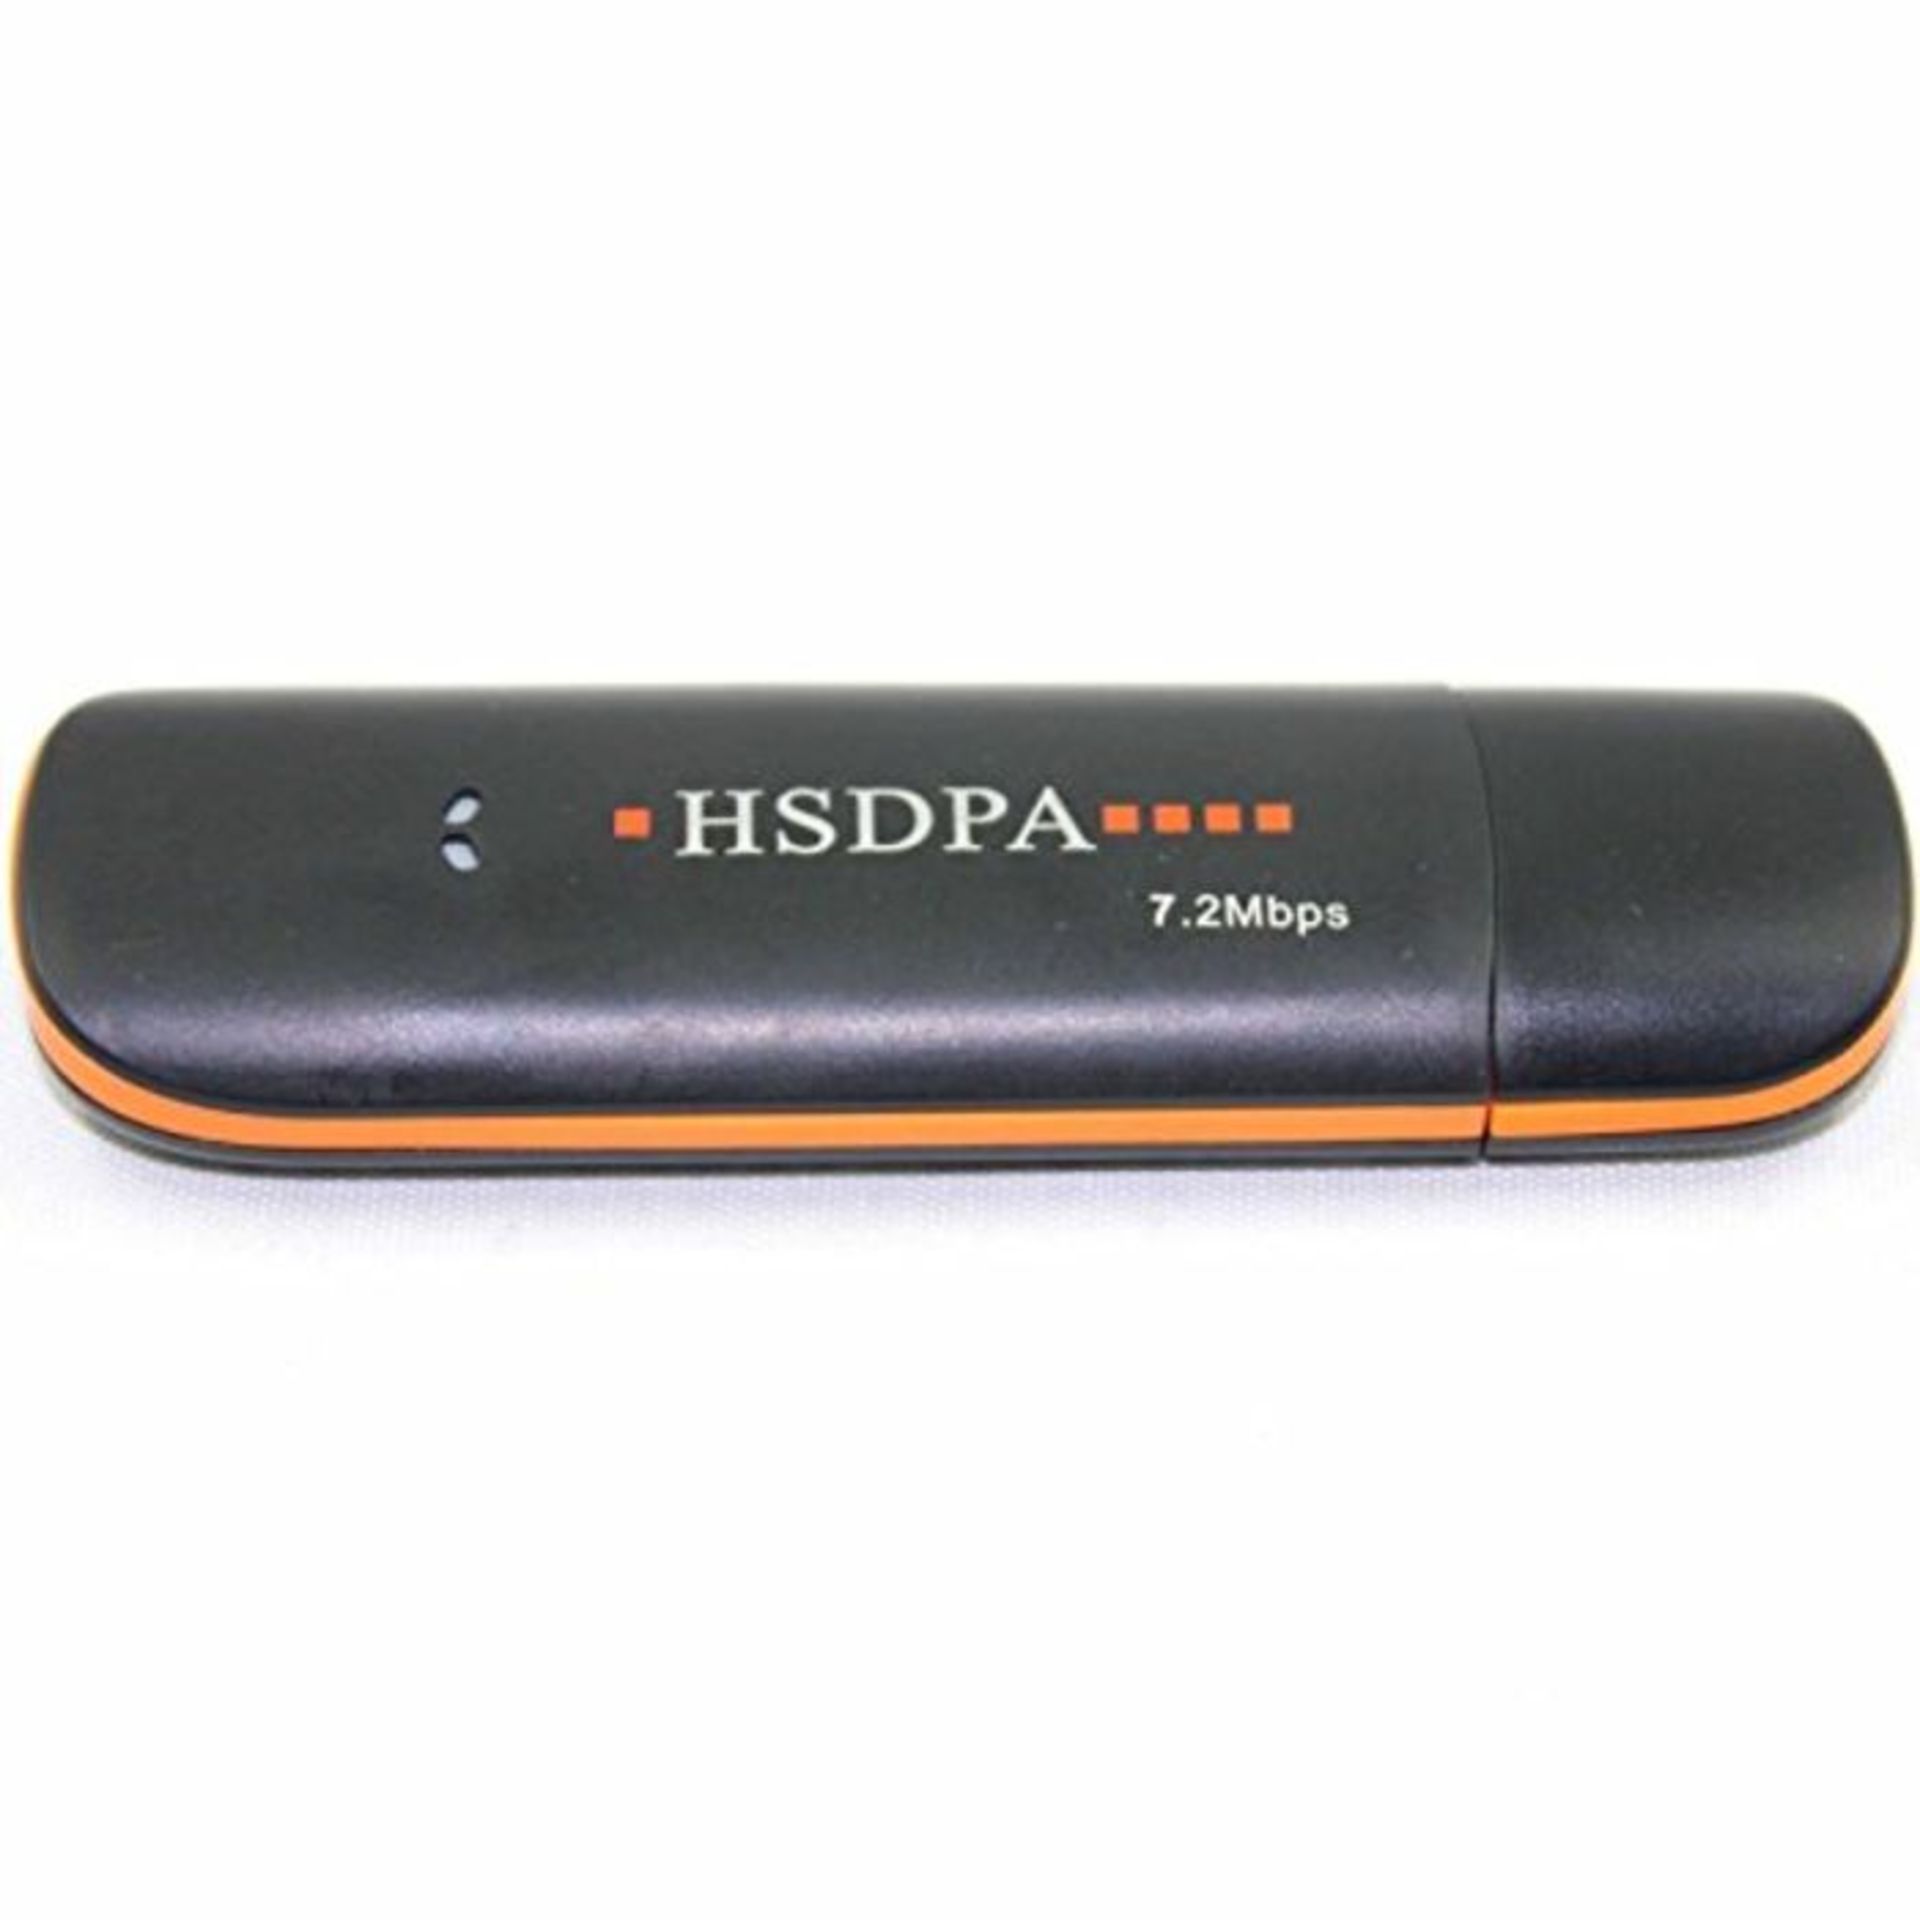 HSDPA USB STICK SIM Modem 7.2Mbps 3G Wireless Dongle TF Card Adapter